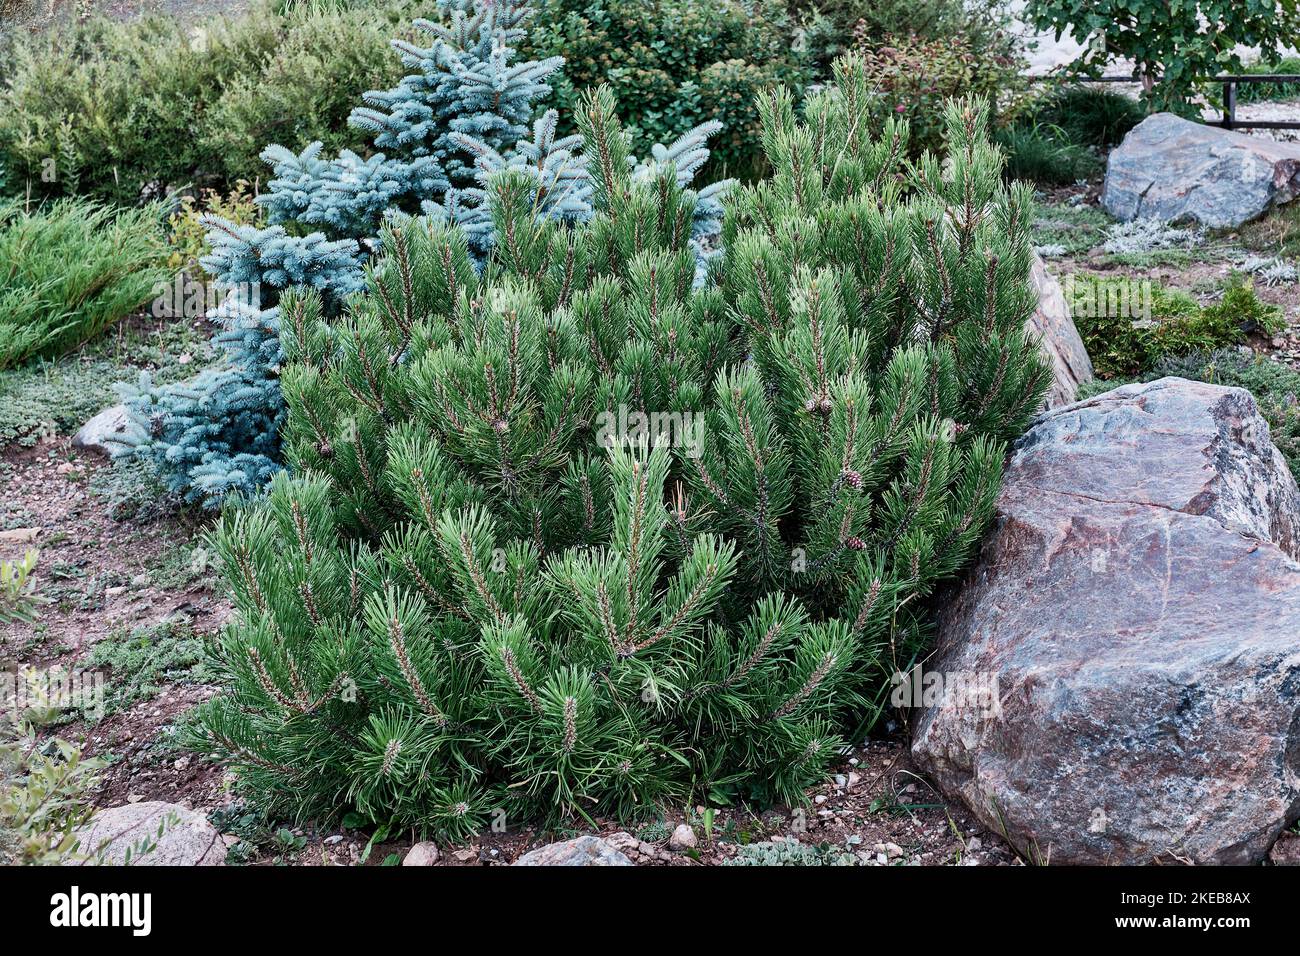 Elfin pine or cedar elfin as decorative natural element in landscape design. Stock Photo